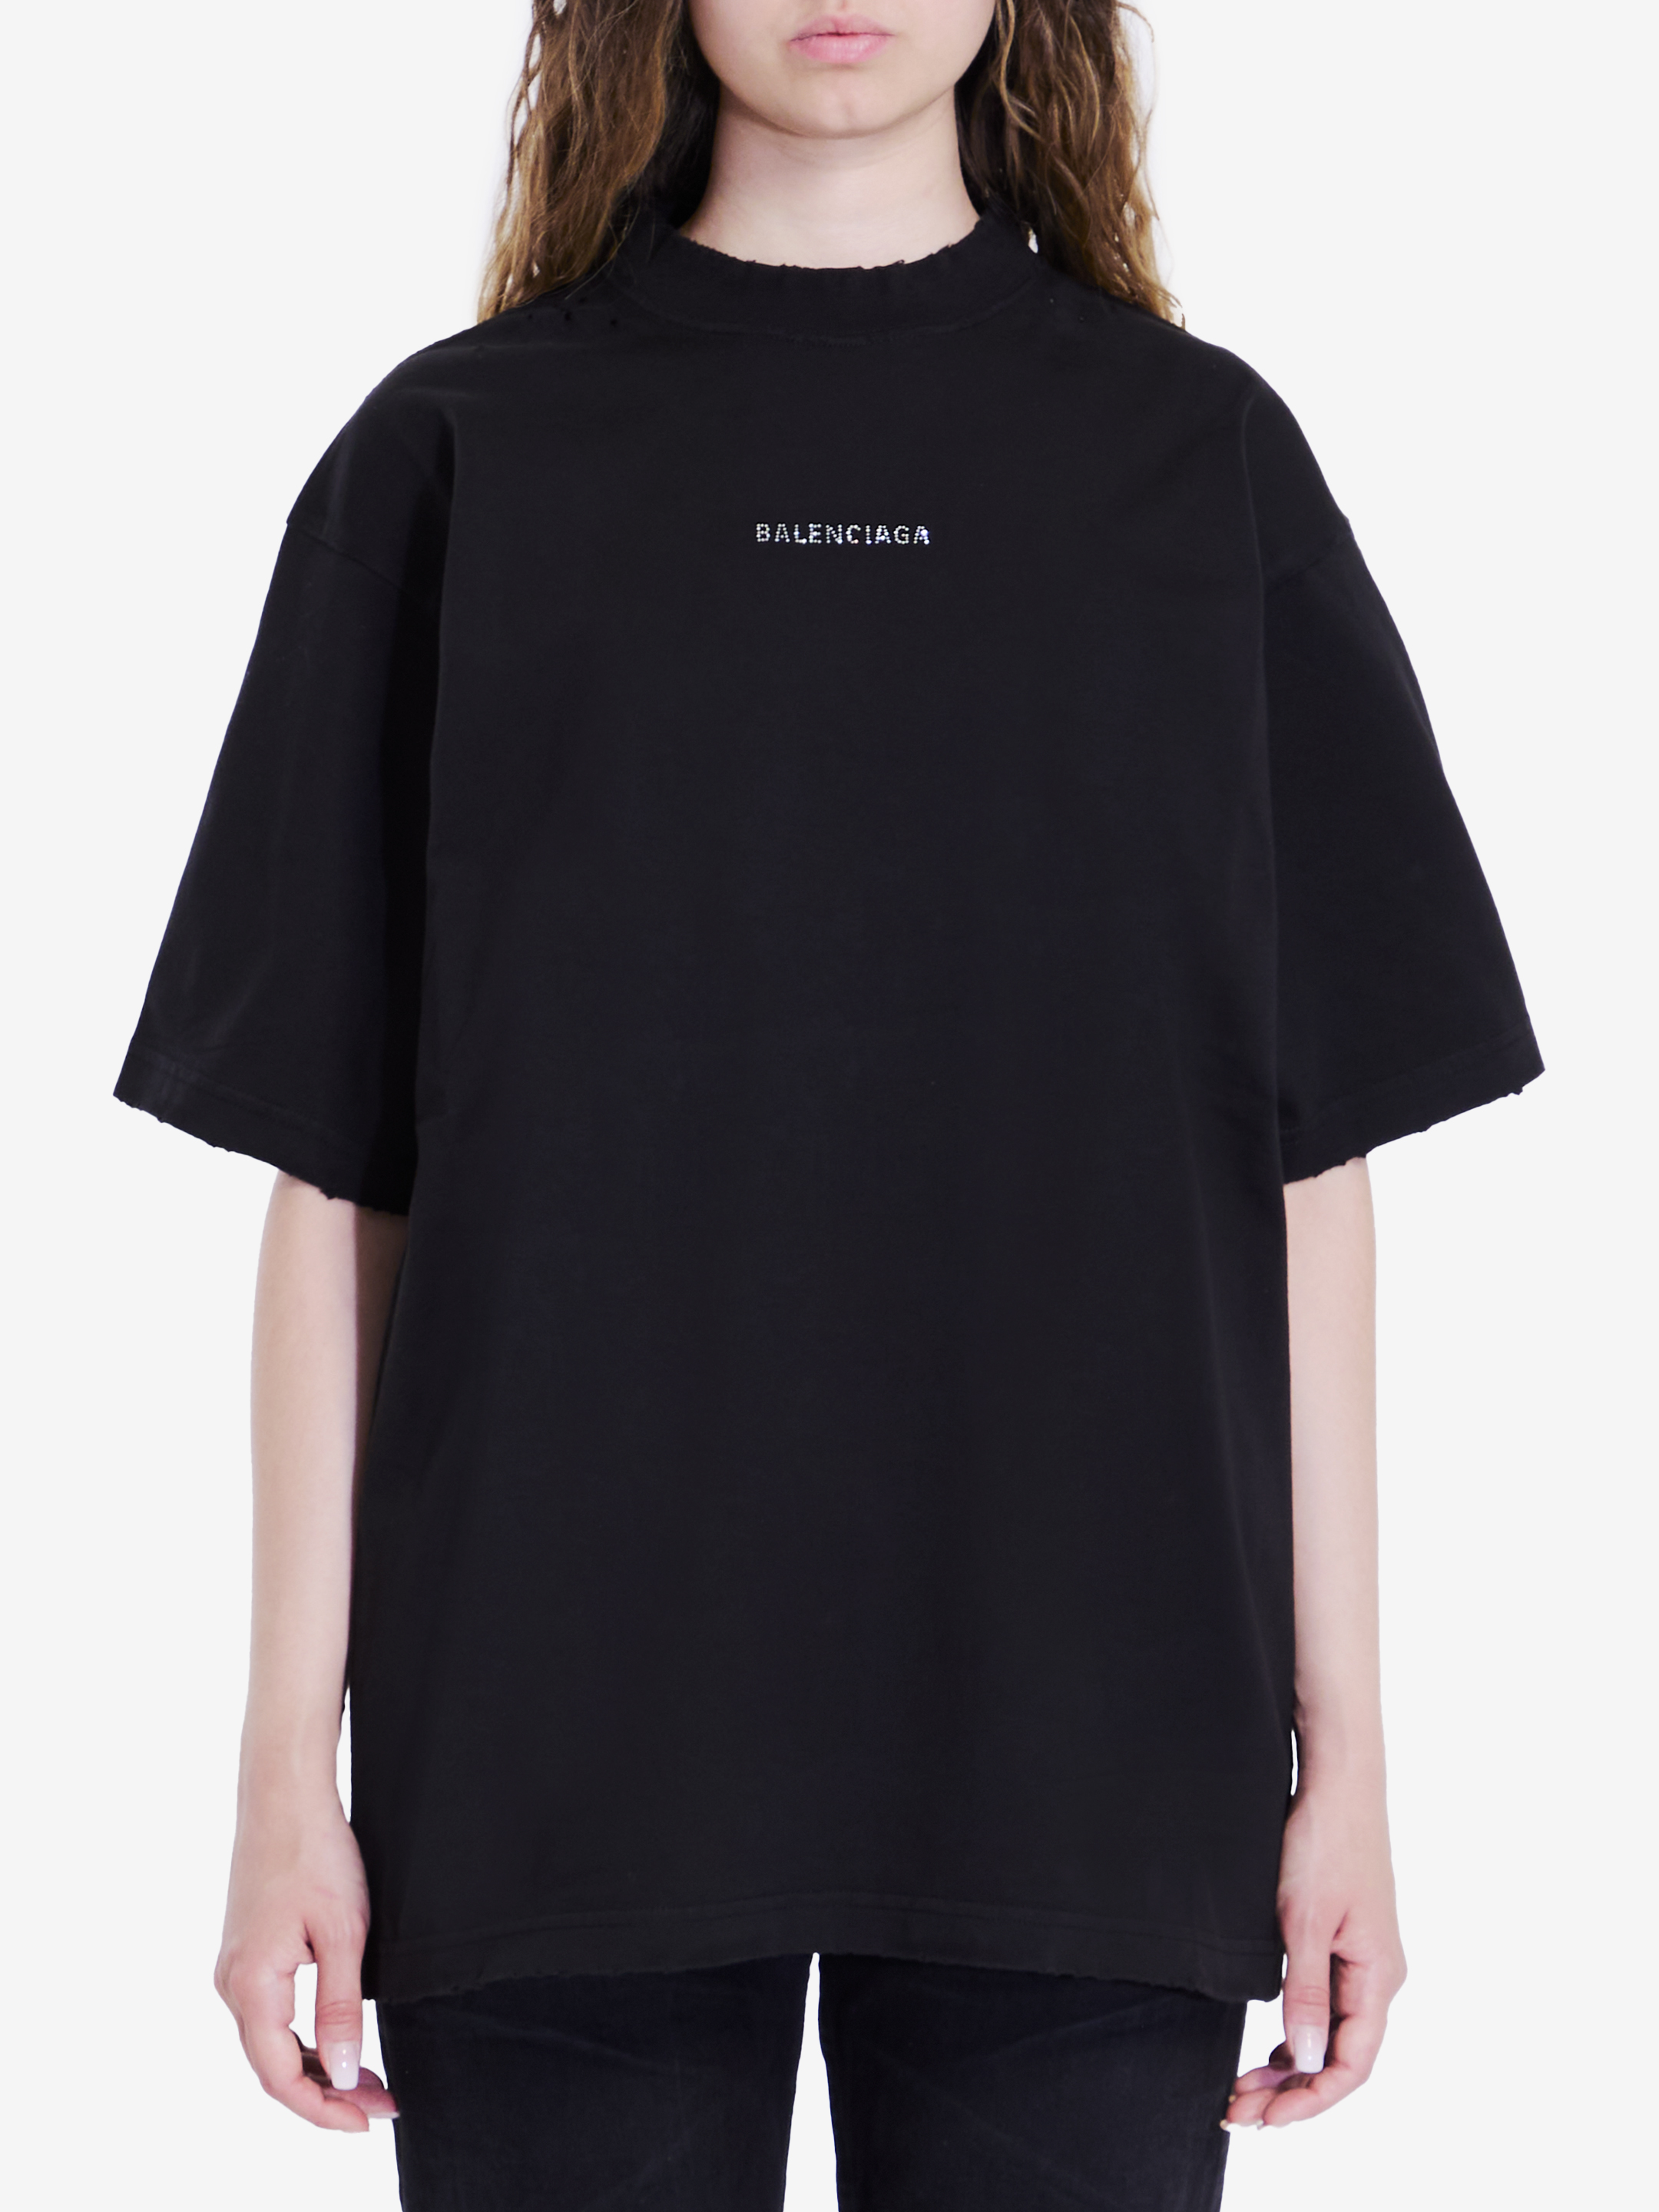 Balenciaga Back Tshirt In Black